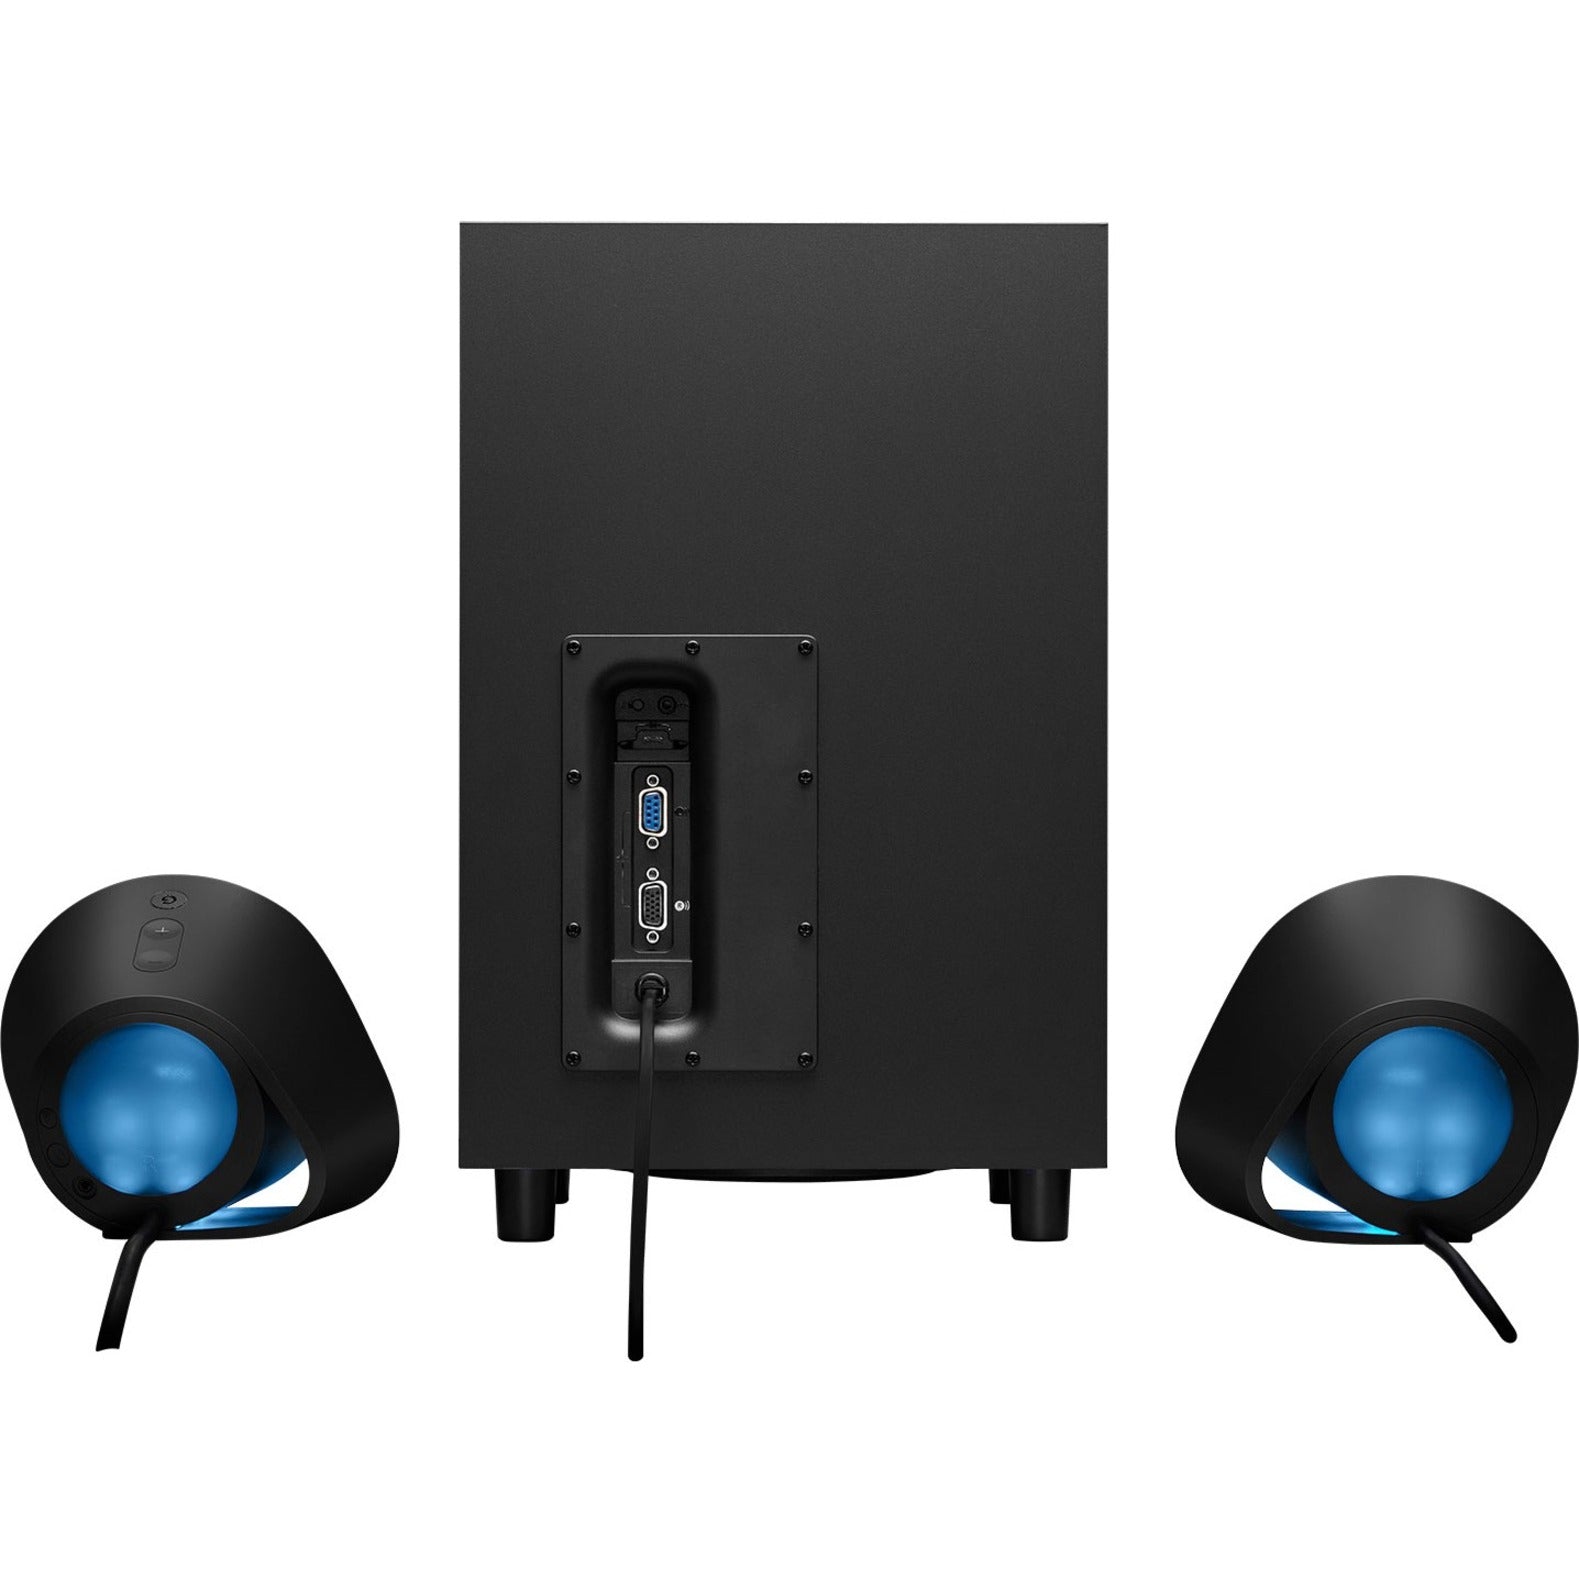 Logitech 980-001300 G560 LIGHTSYNC PC Gaming Speaker, 3D Surround Sound, DTS:X, 240W RMS Output Power, Wireless, 2.1 Speaker Configuration